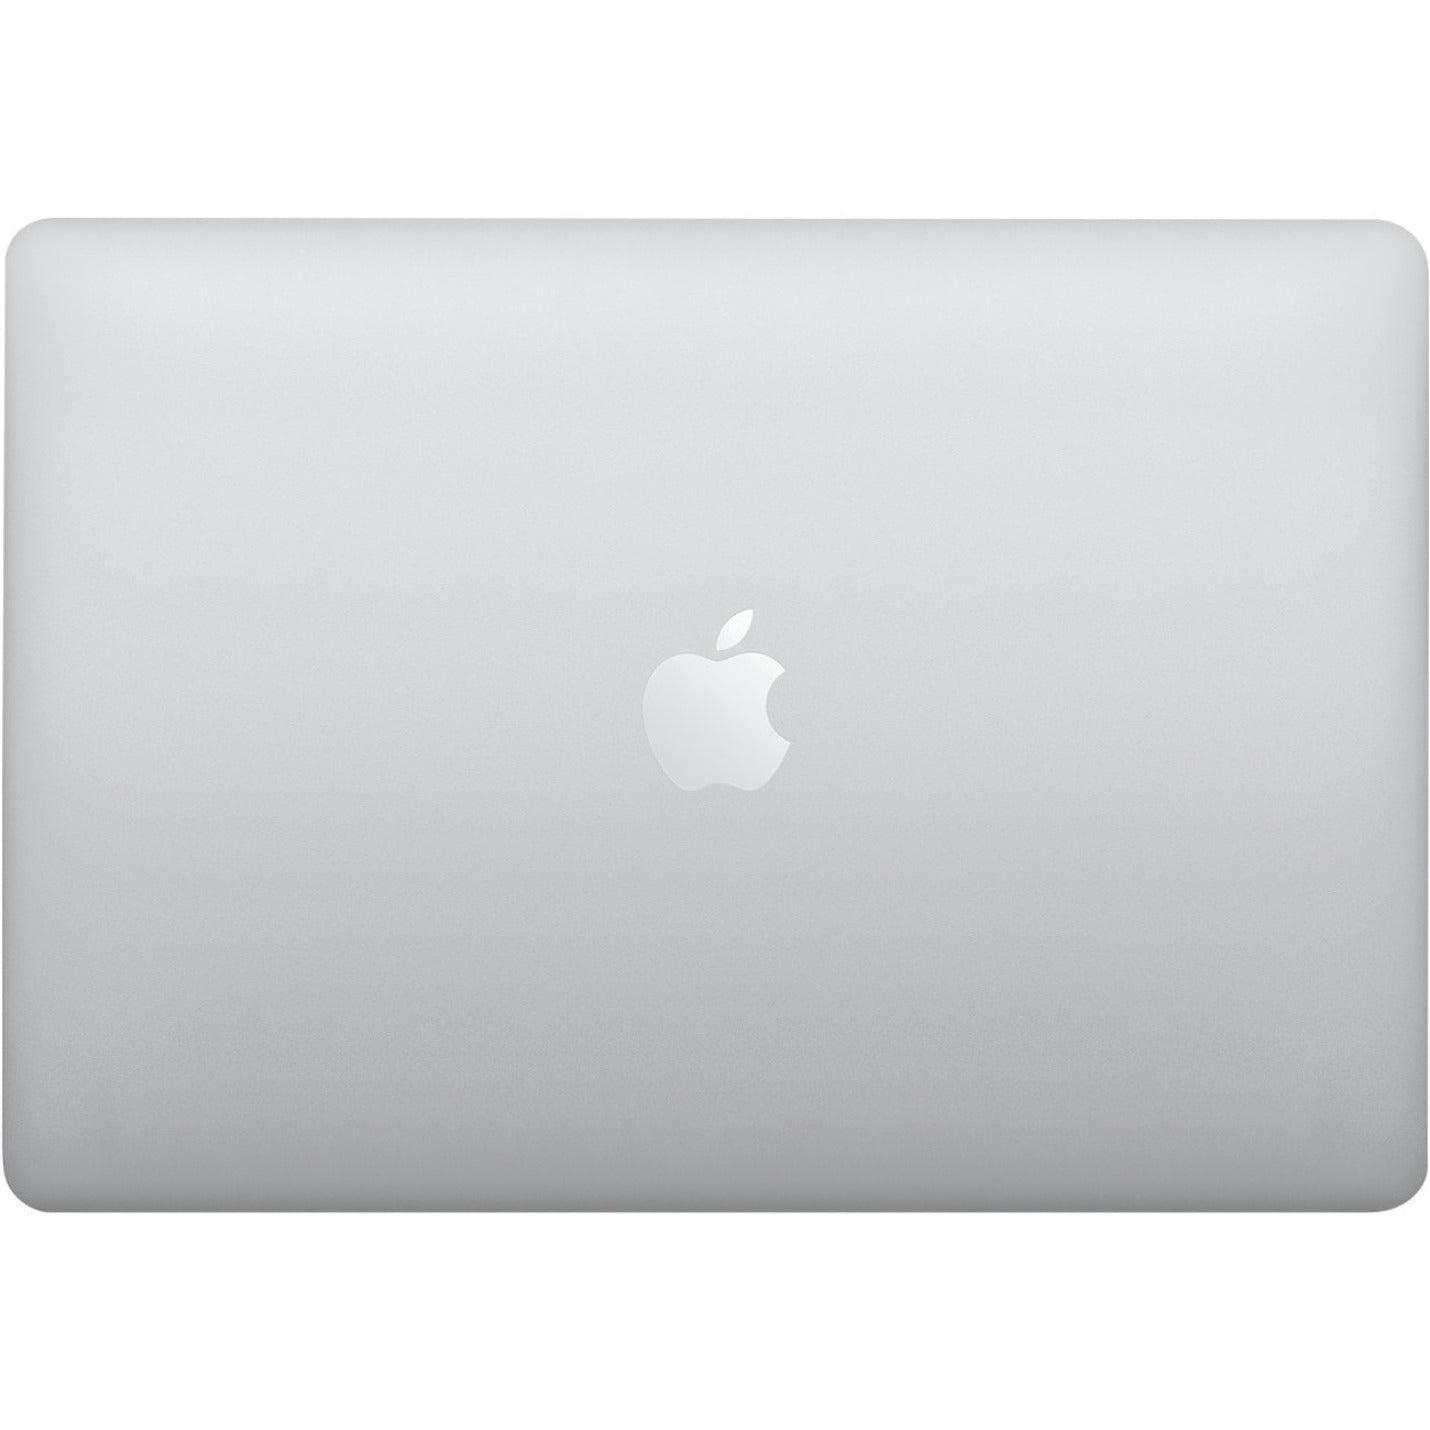 Apple MYDA2LL/A MacBook Pro 13.3" Notebook, Octa-core, 8GB RAM, 256GB SSD, Silver